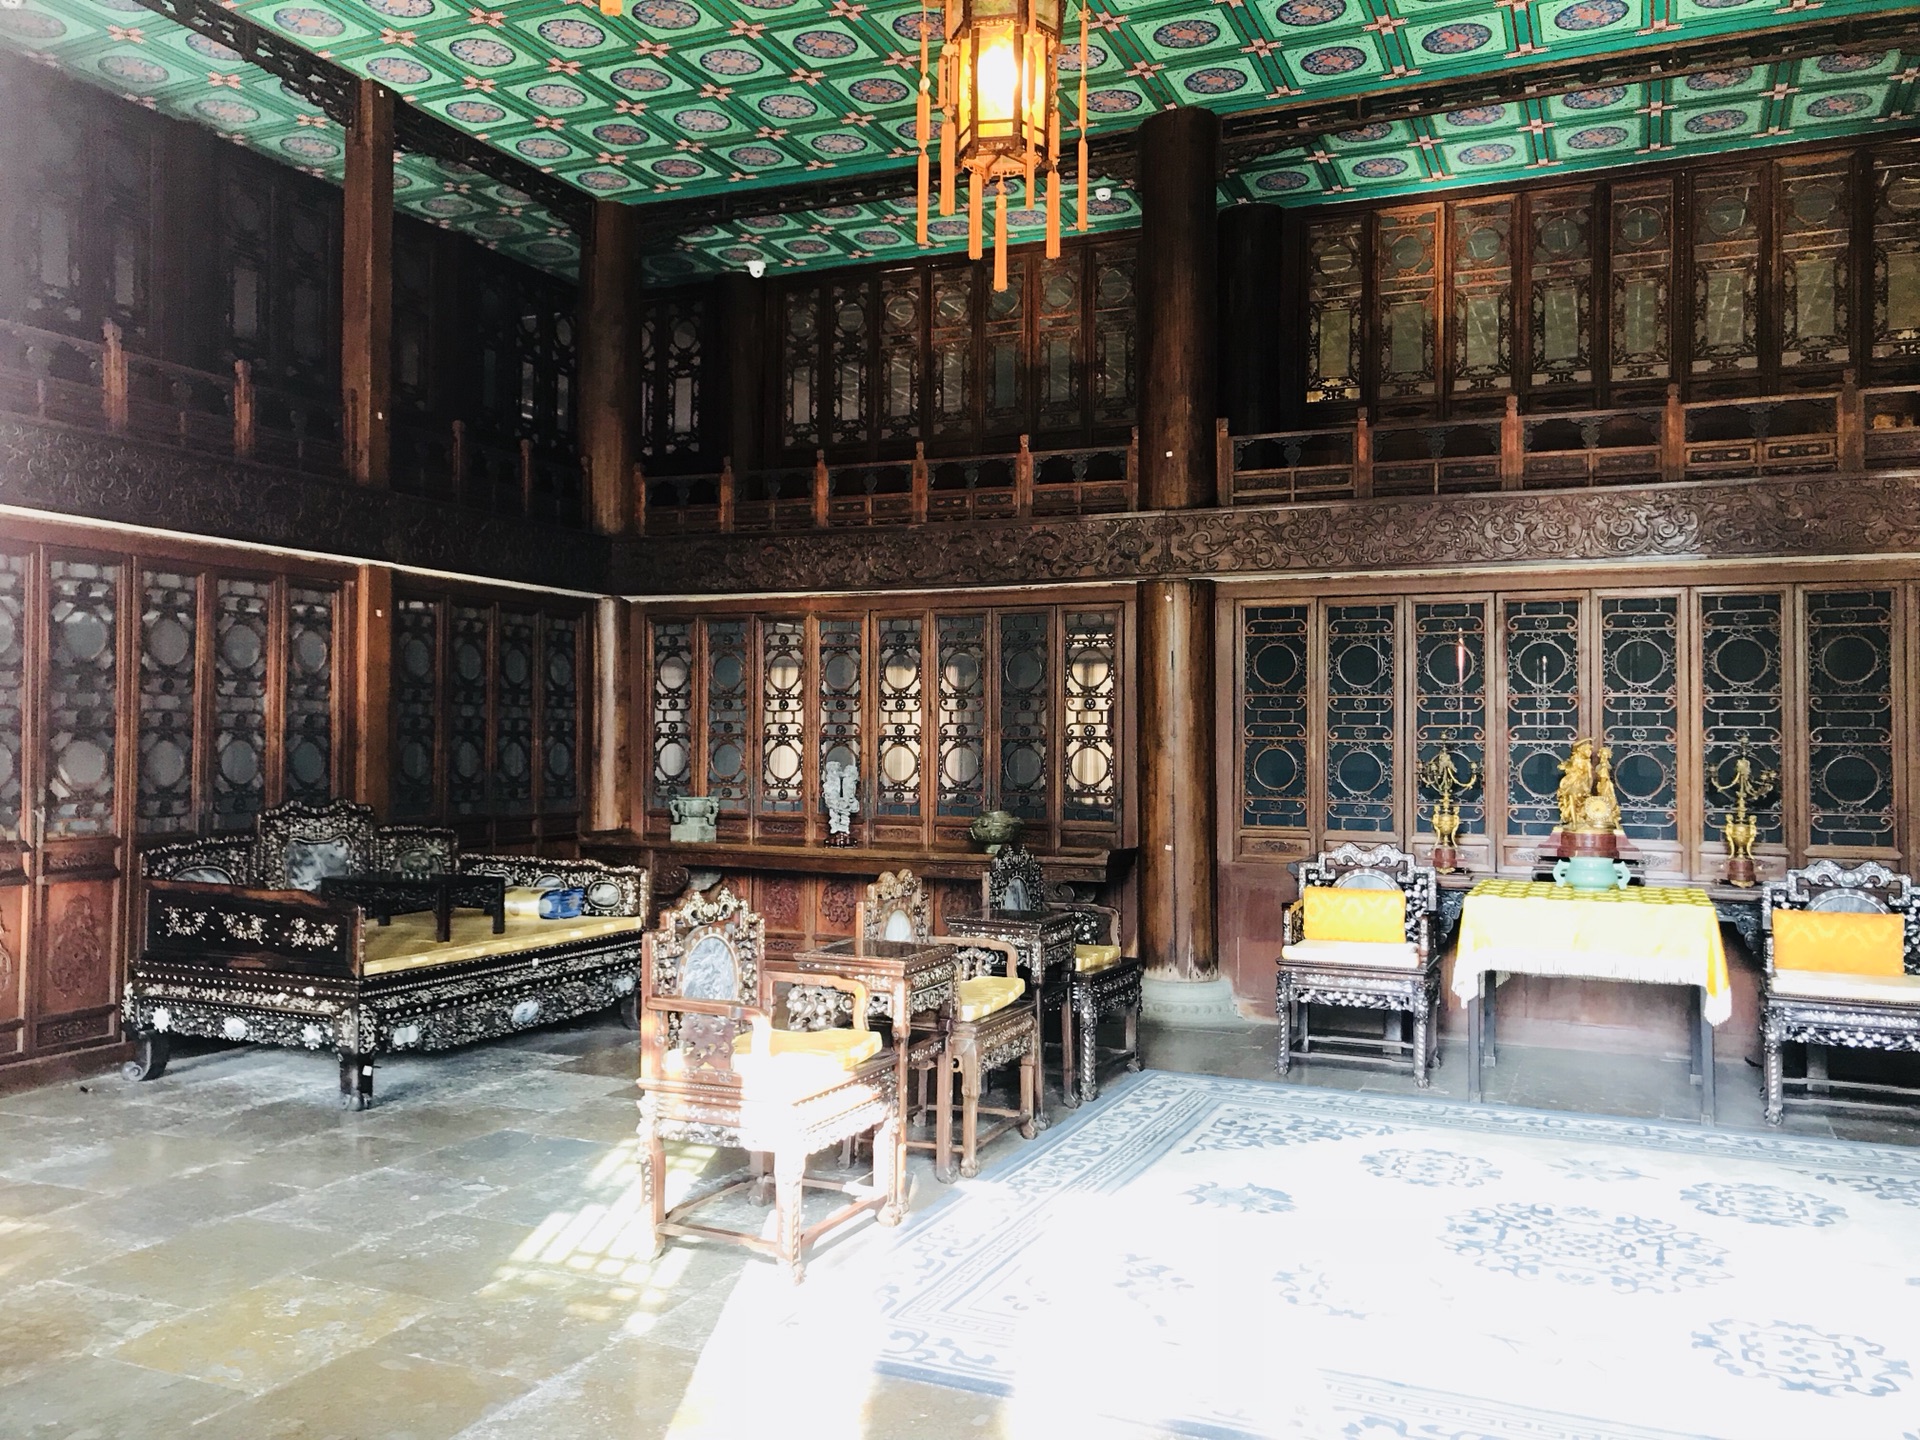 Prince Gong Mansion